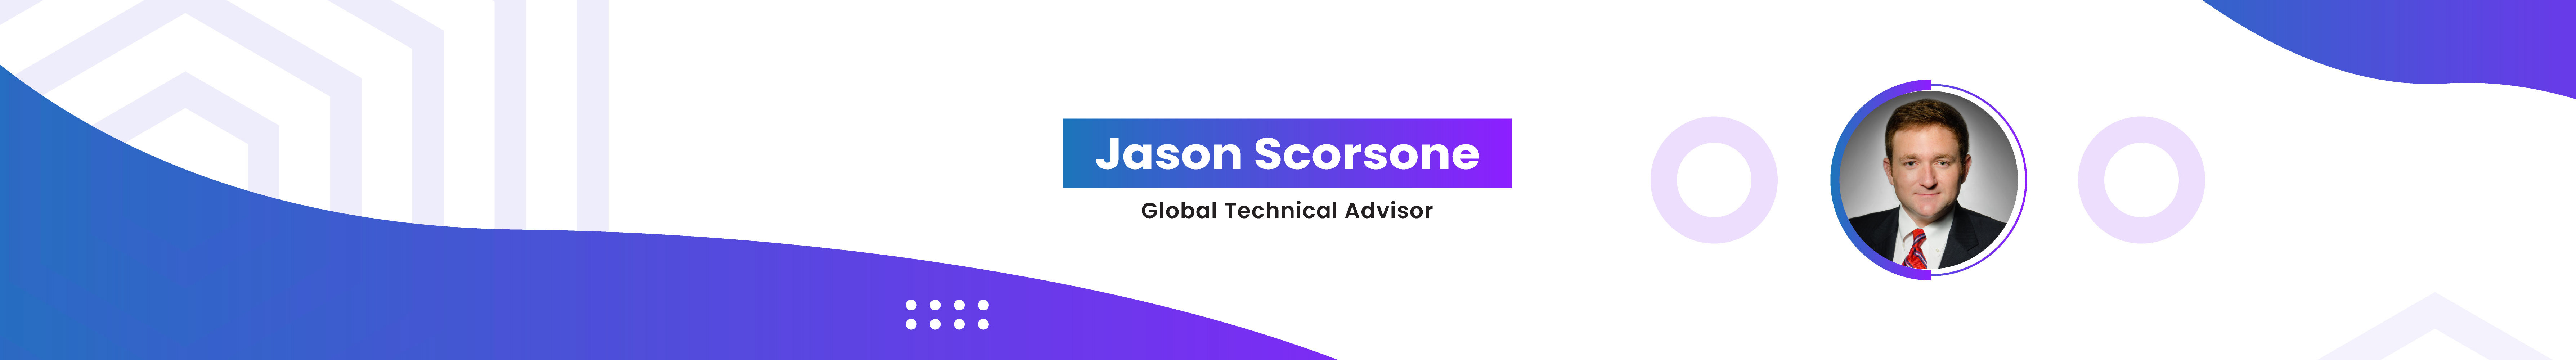 Jason Scorsones profilbanner